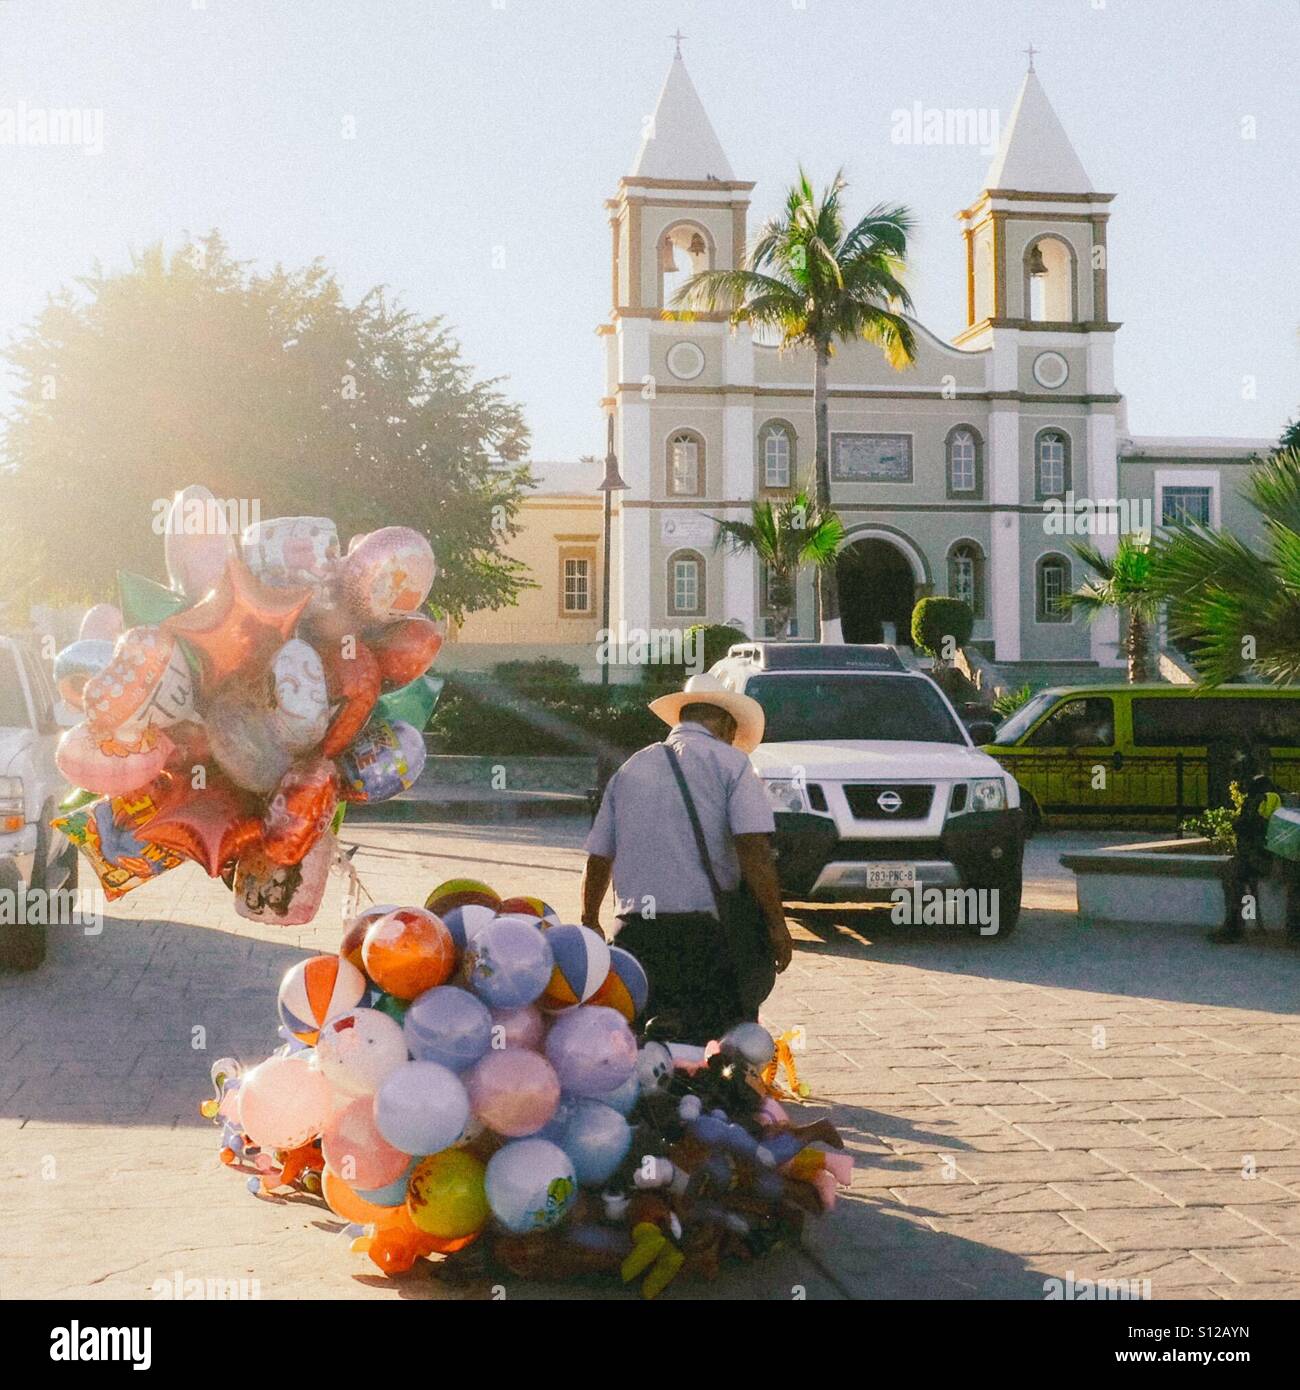 Balloon seller in the plaza in San Jose del Cabo, Mexico Stock Photo